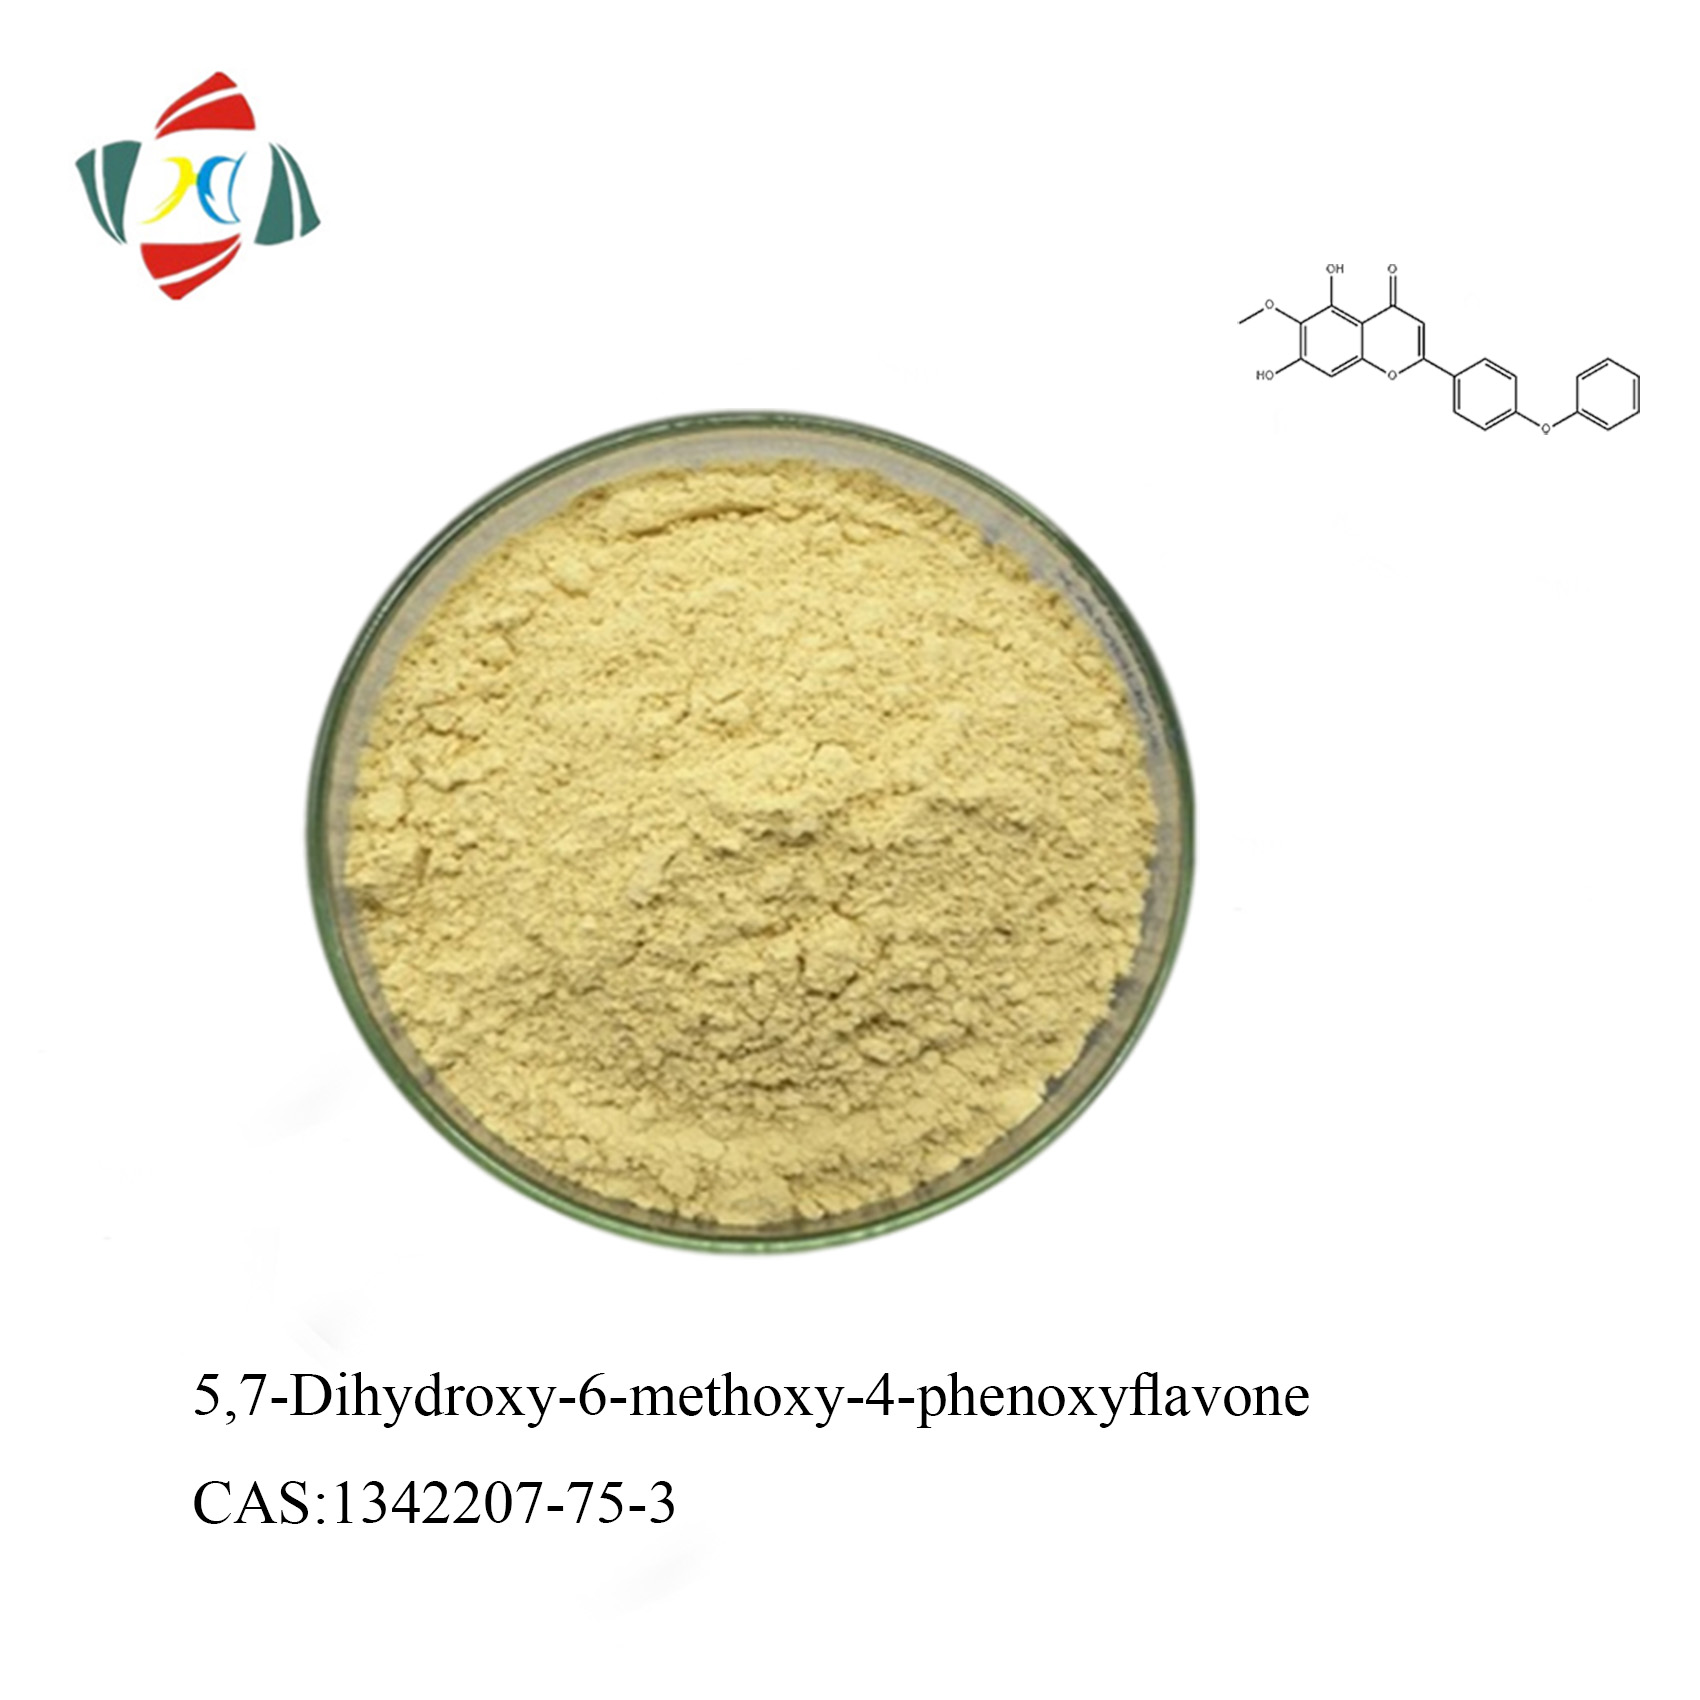 5,7-Dihydroxy-6-methoxy-4-phenoxyflavone CAS 1342207-75-3